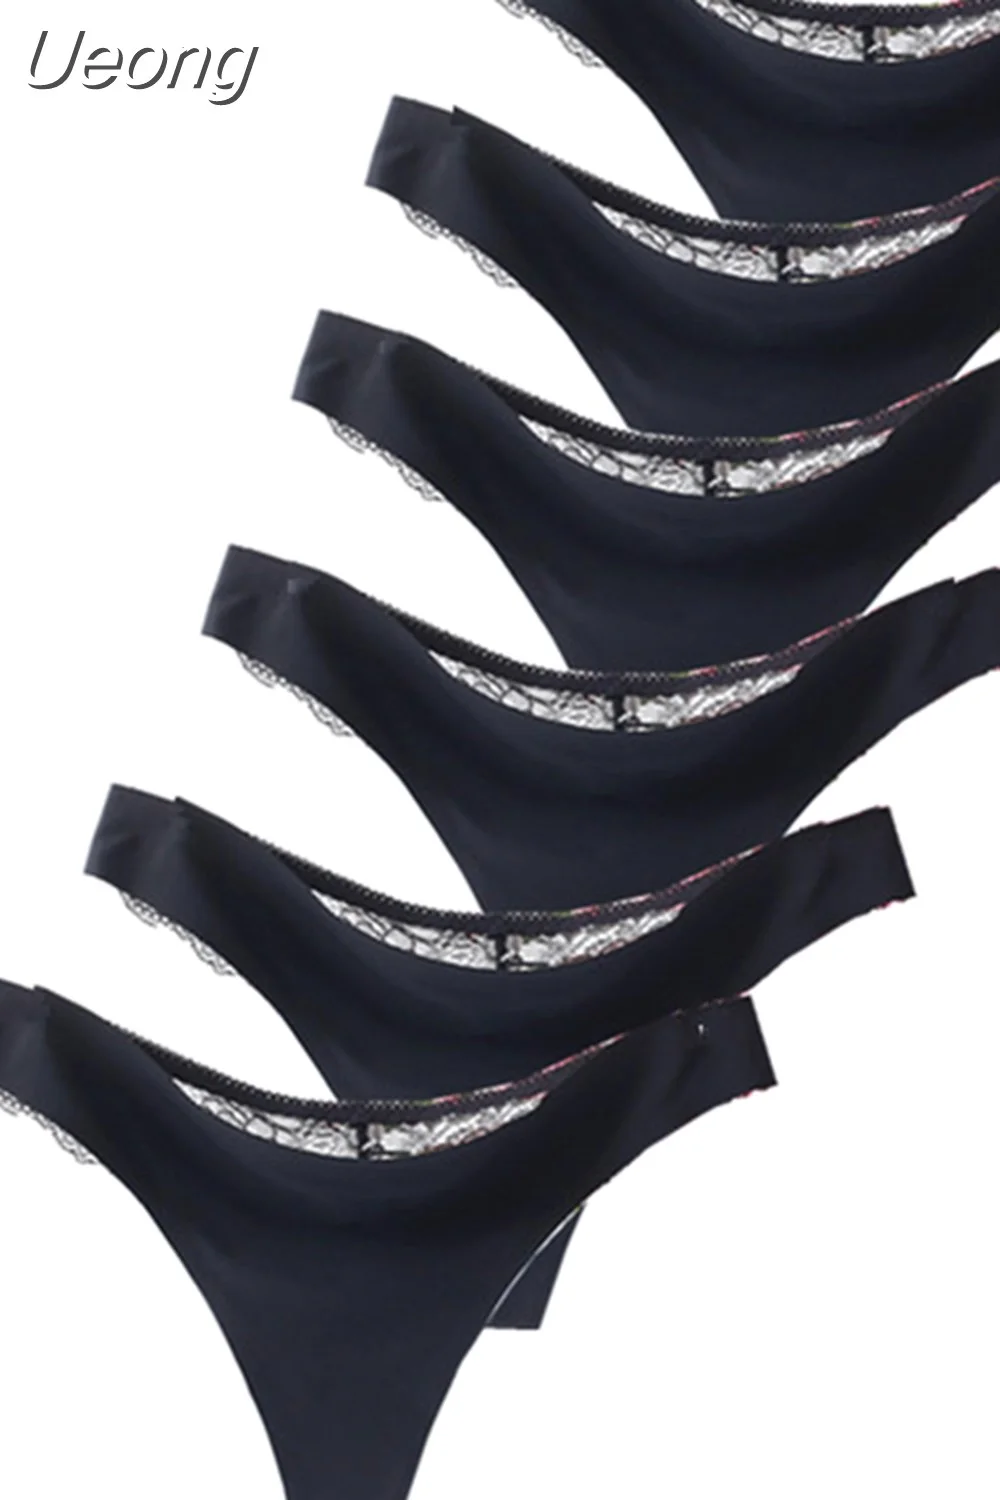 Ueong Seamless Thong Tangas 6pcs/lot Women Fashion Panty Sexy Lace Ice Silk G String Femme Comfortable Ladies Underwear